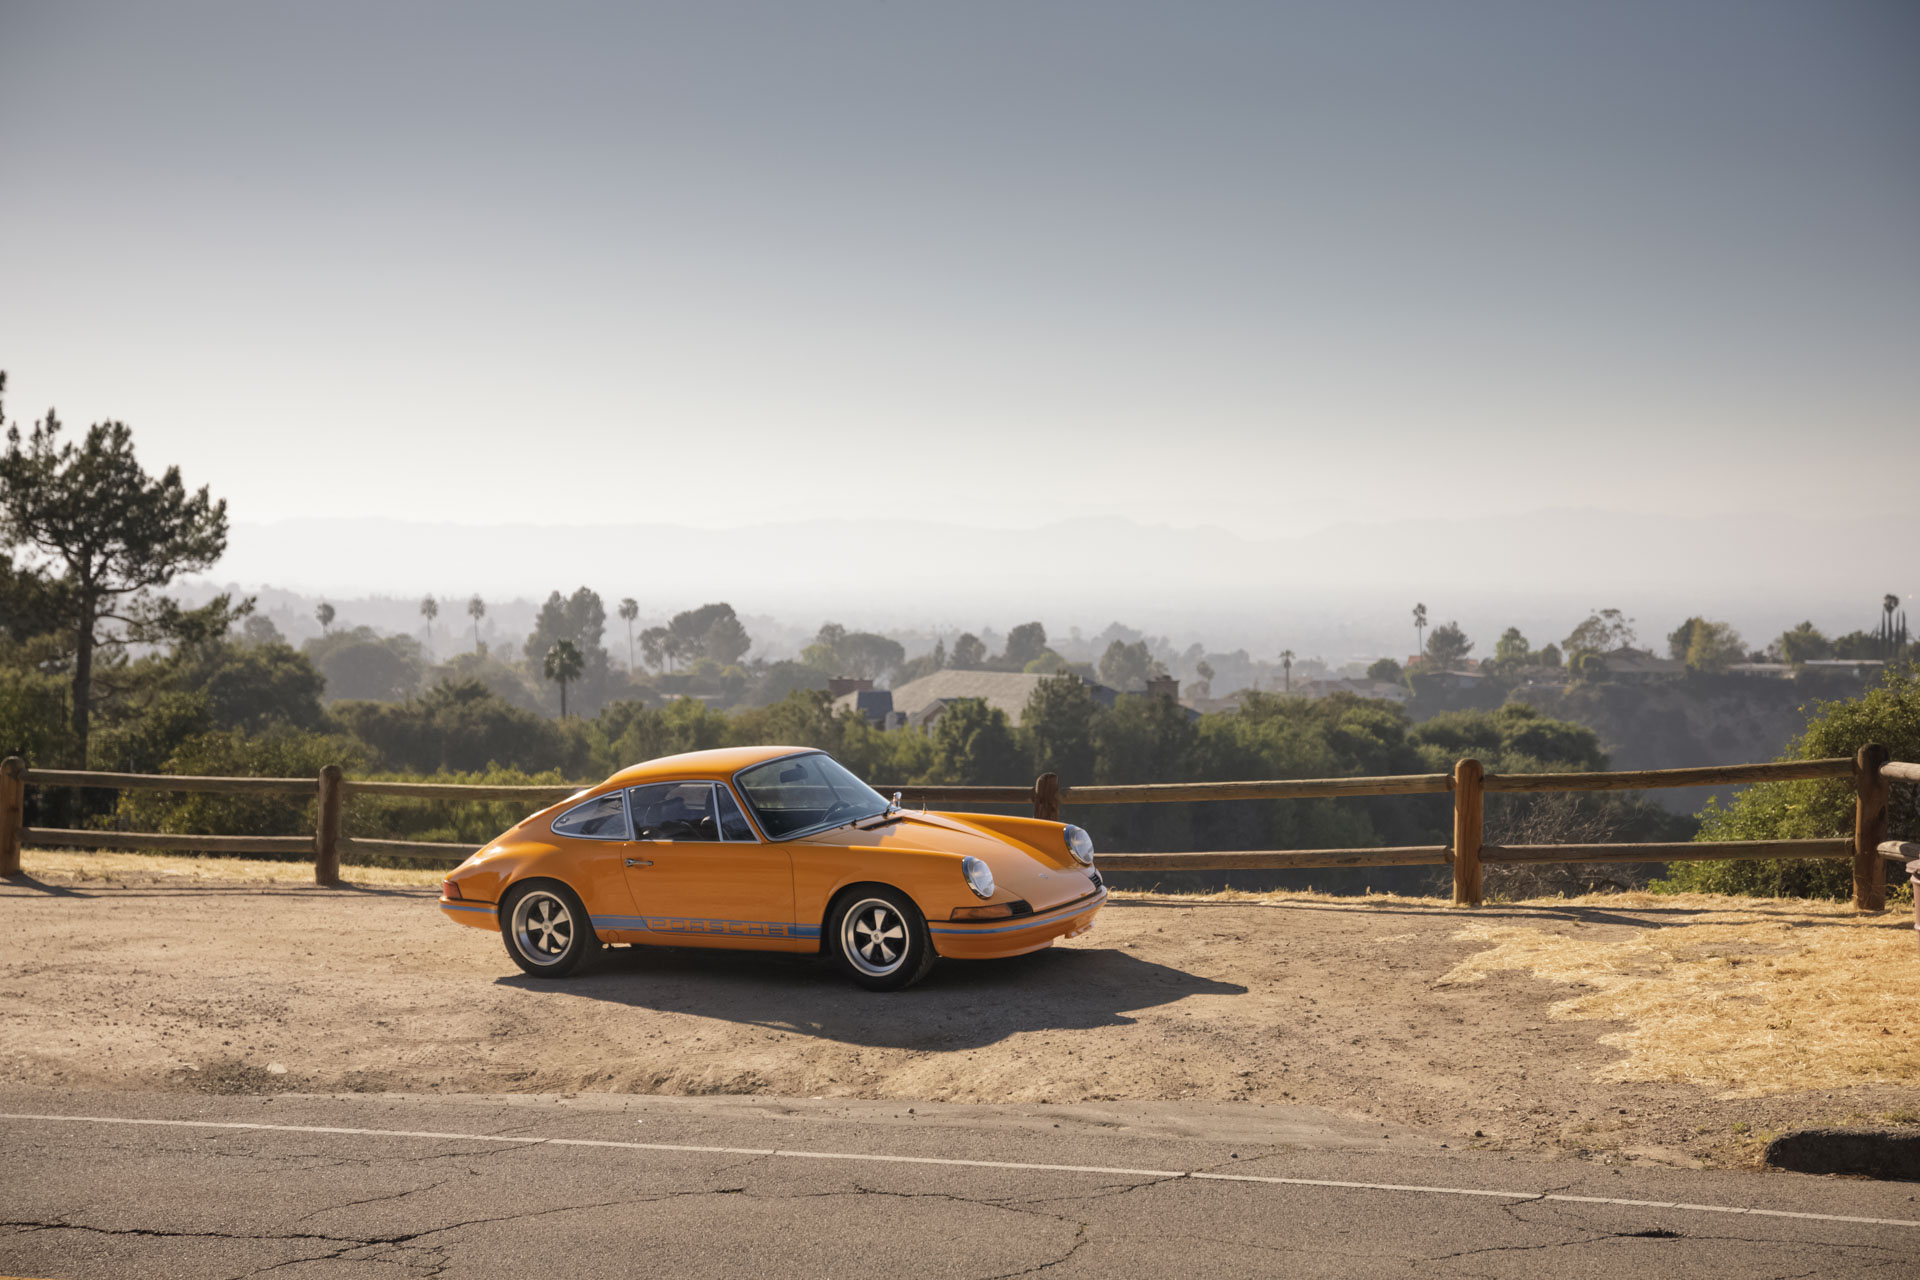 Porsche 911 in Los Angeles - Sergei Zjuganov Art & Media